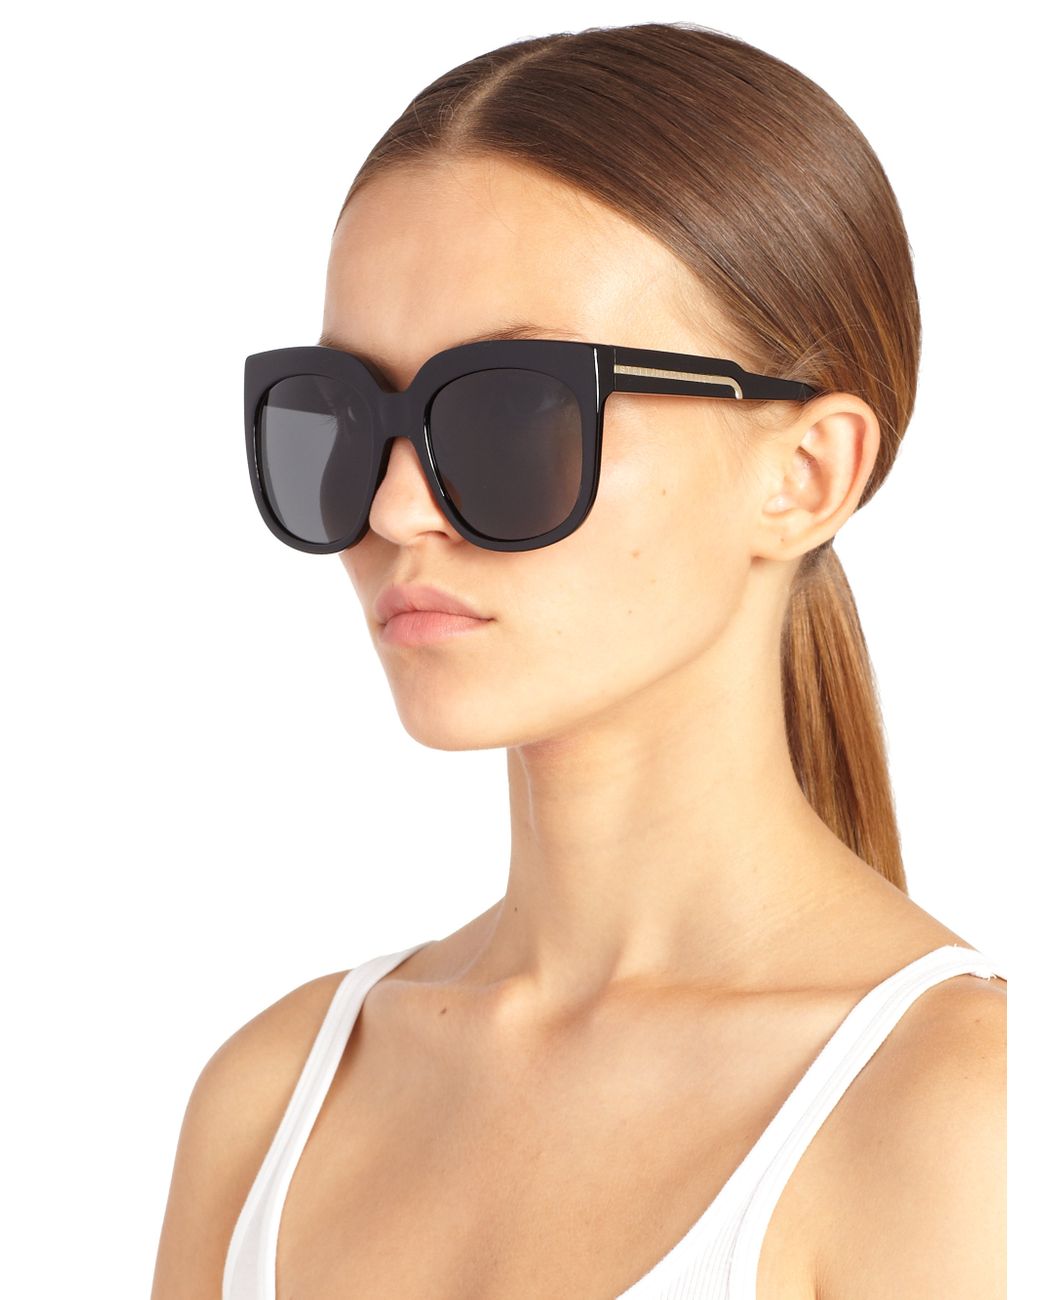 Stella McCartney Women's Black Metal Oversized Round Sunglasses